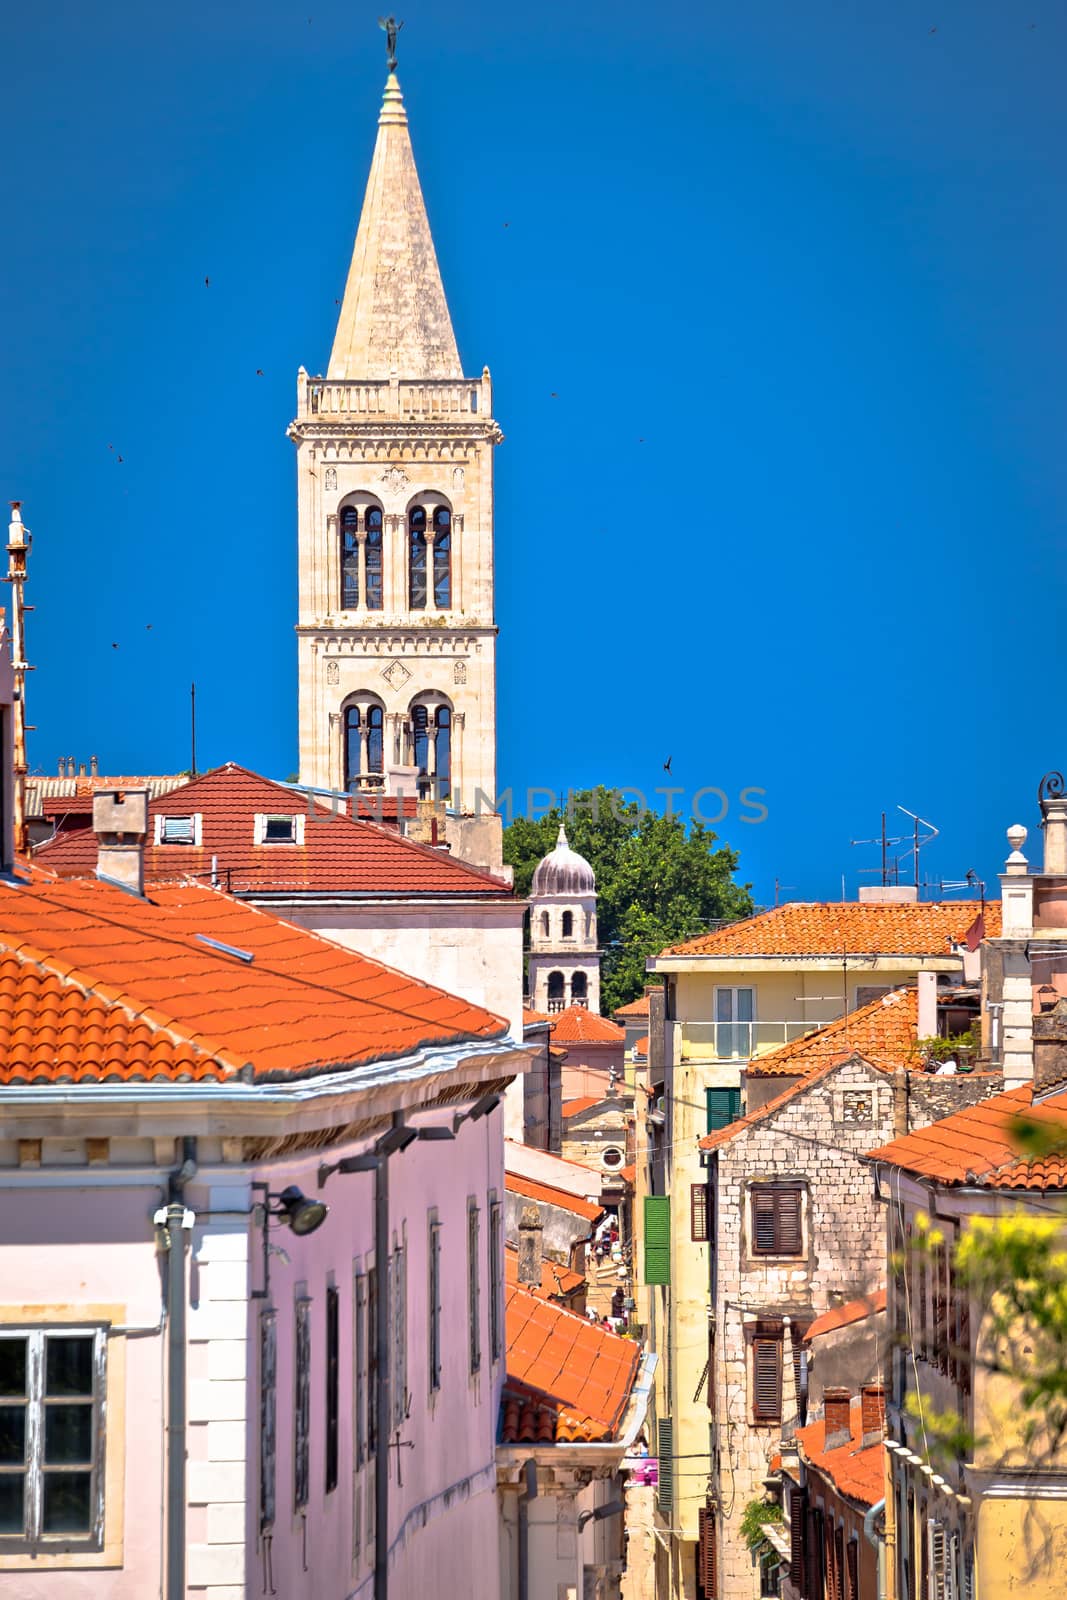 Historic Zadar tower and Kalelarga street view, Adriatic coast in Dalmatia region Croatia